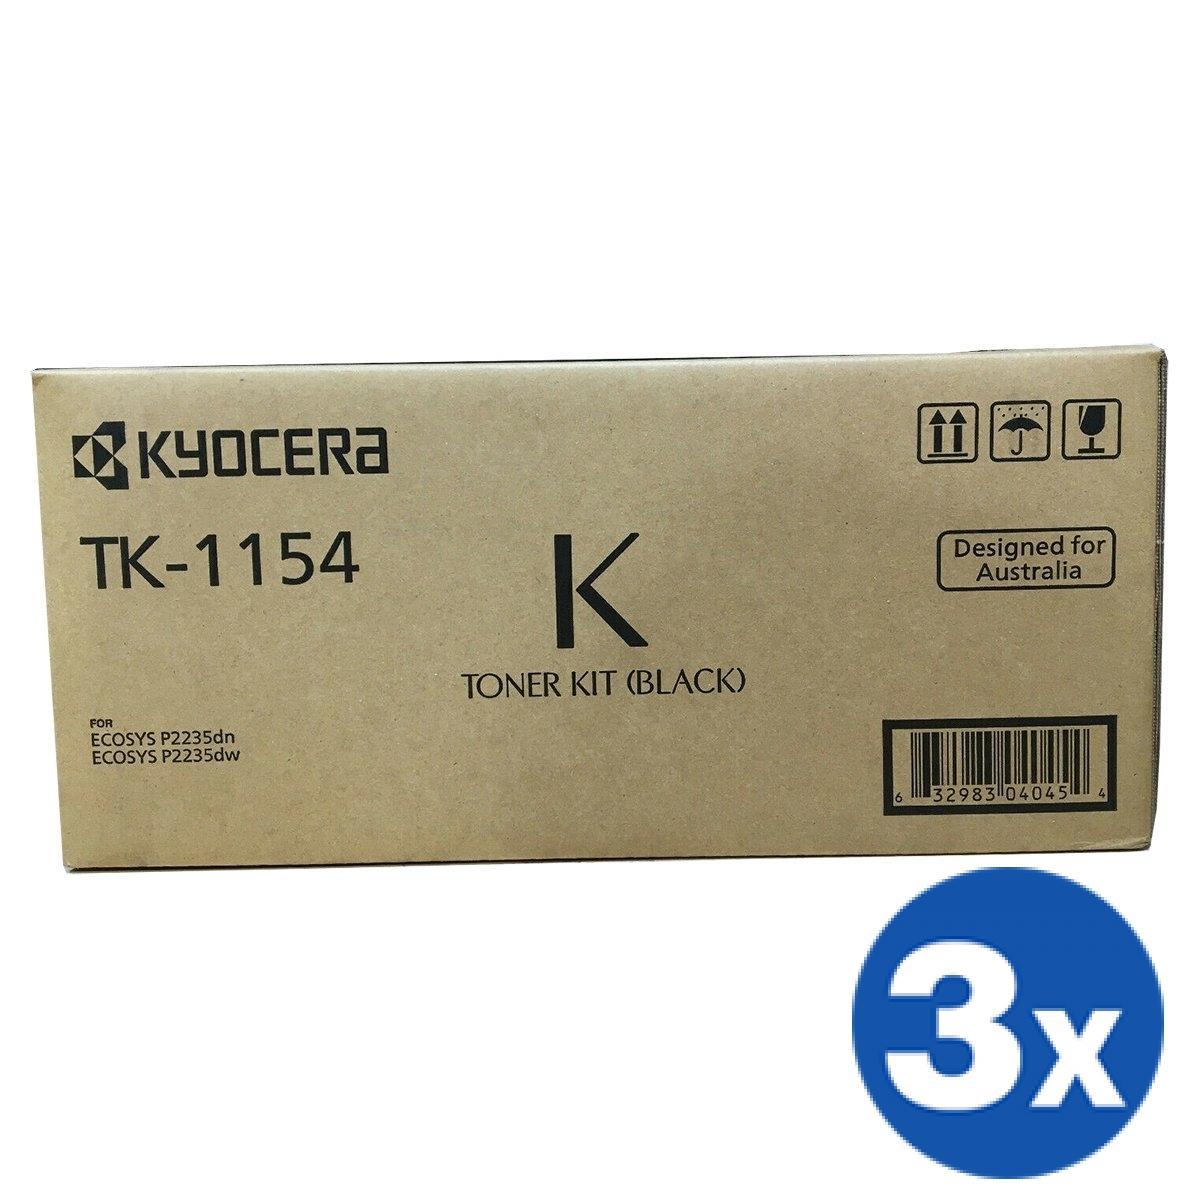 3 x Original Kyocera TK-1154 TK1154 Black Toner Cartridge P2235DW, P2235DN